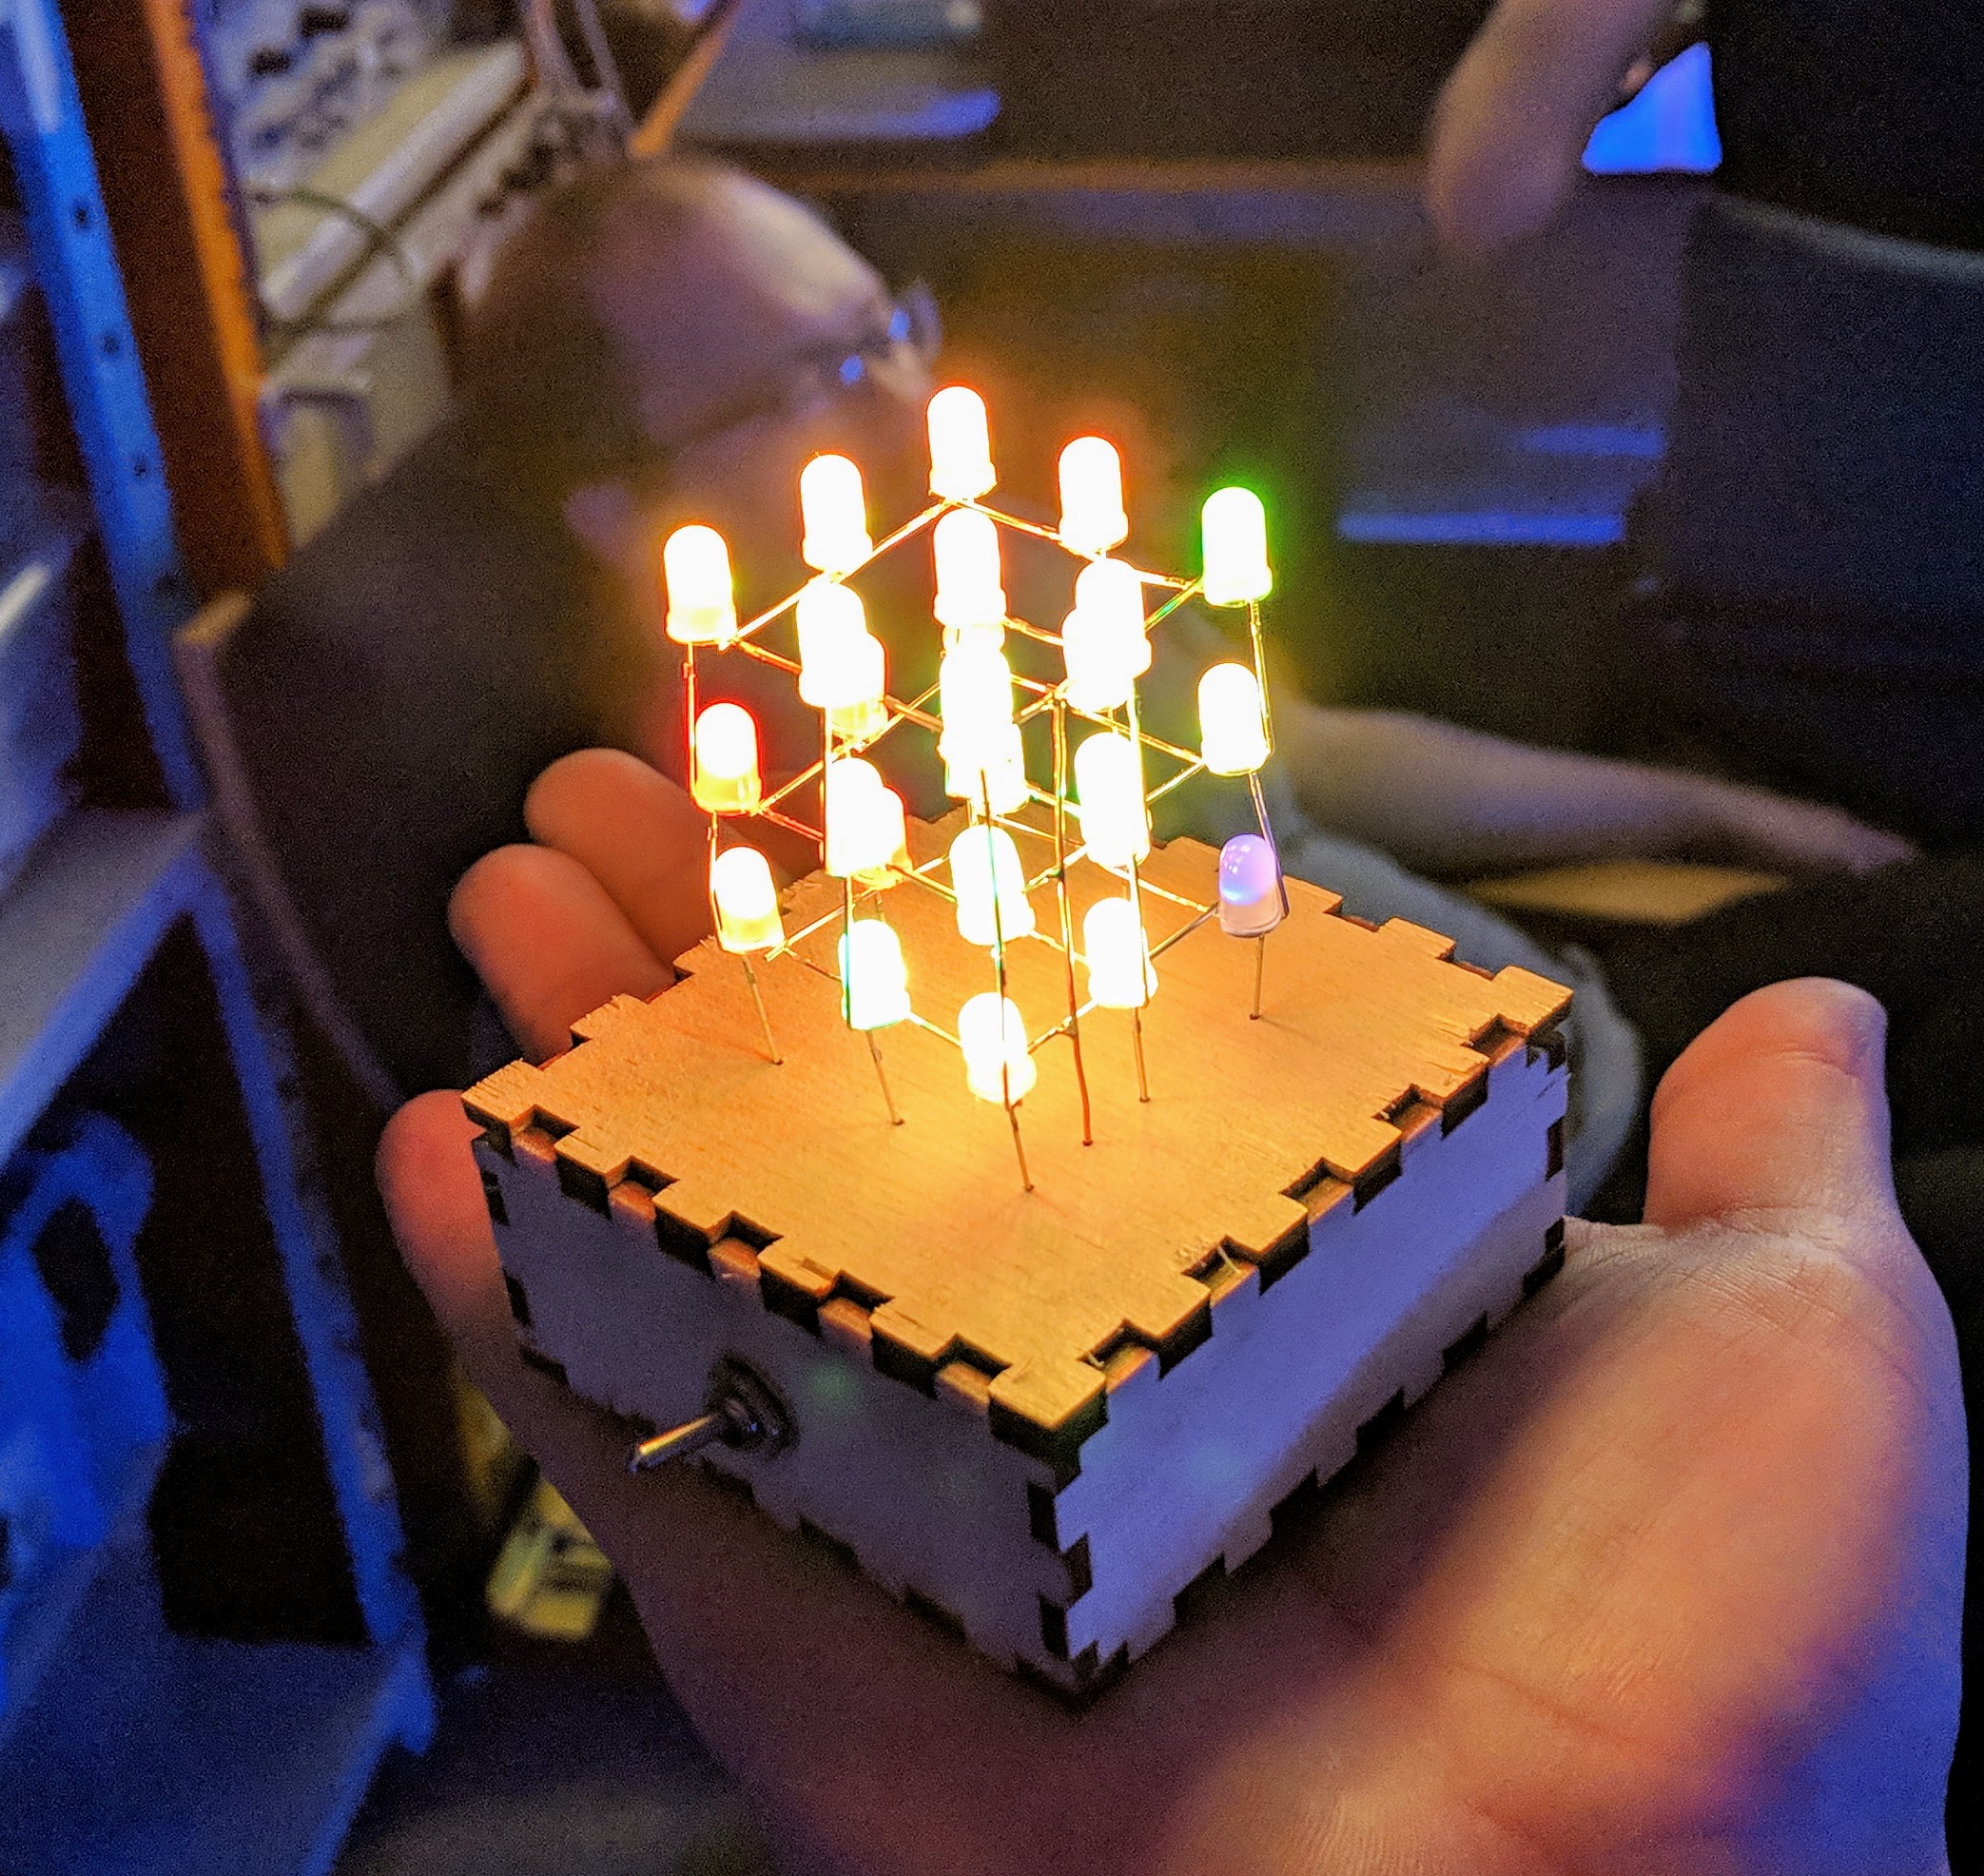 LED Cube - Ein bunter LED 3D-Würfel mit 27 bunt leuchtenden LEDs